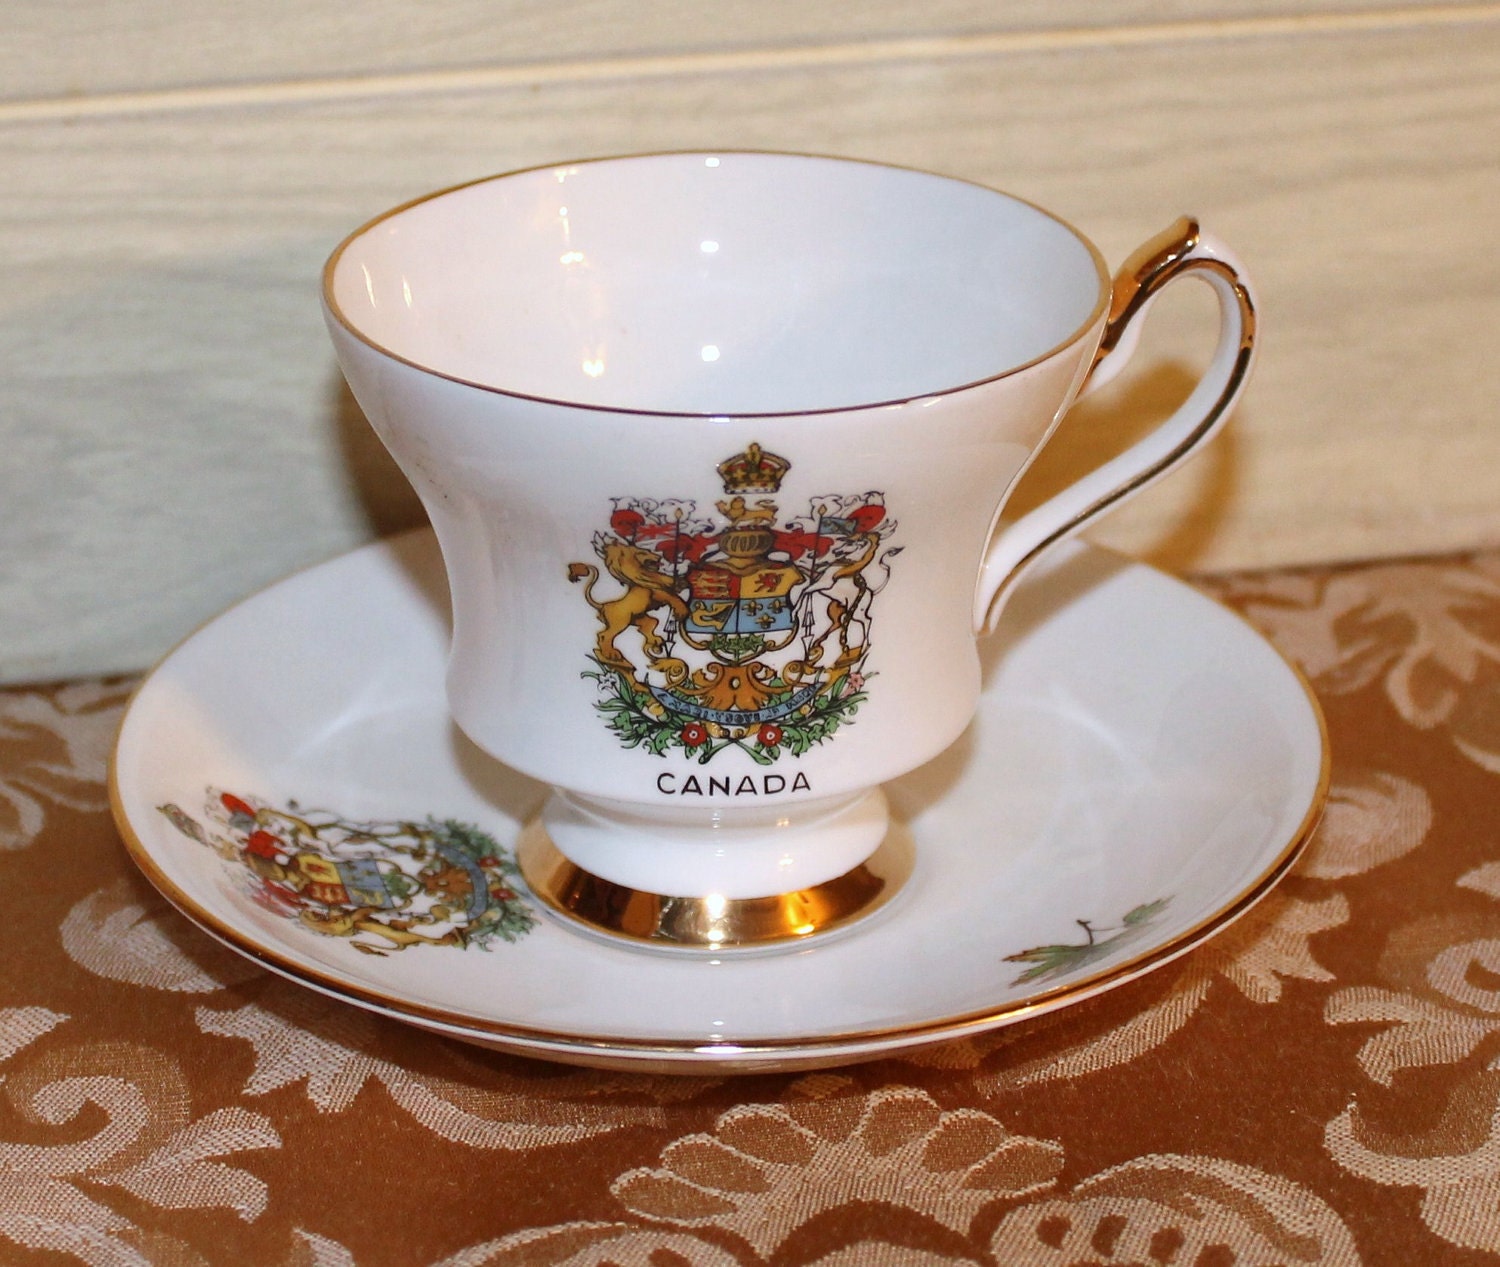 Saucer   and Canada England Vintage Teacup  vintage   China Bone  Elbro Royal and  china saucer teacup